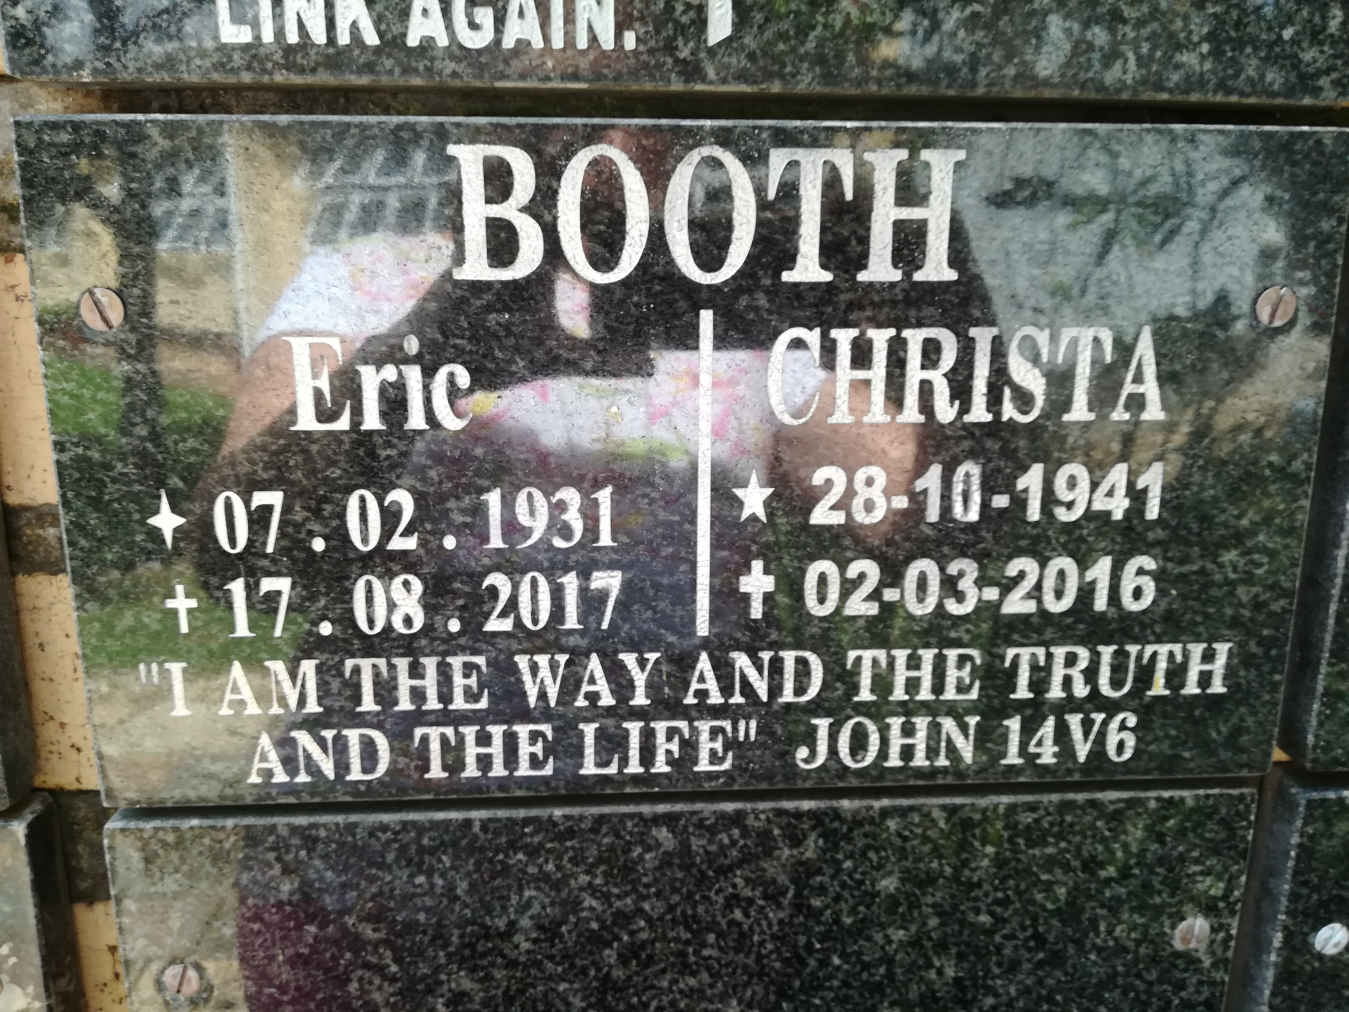 BOOTH Eric 1931-2017 & Christa 1941-2016